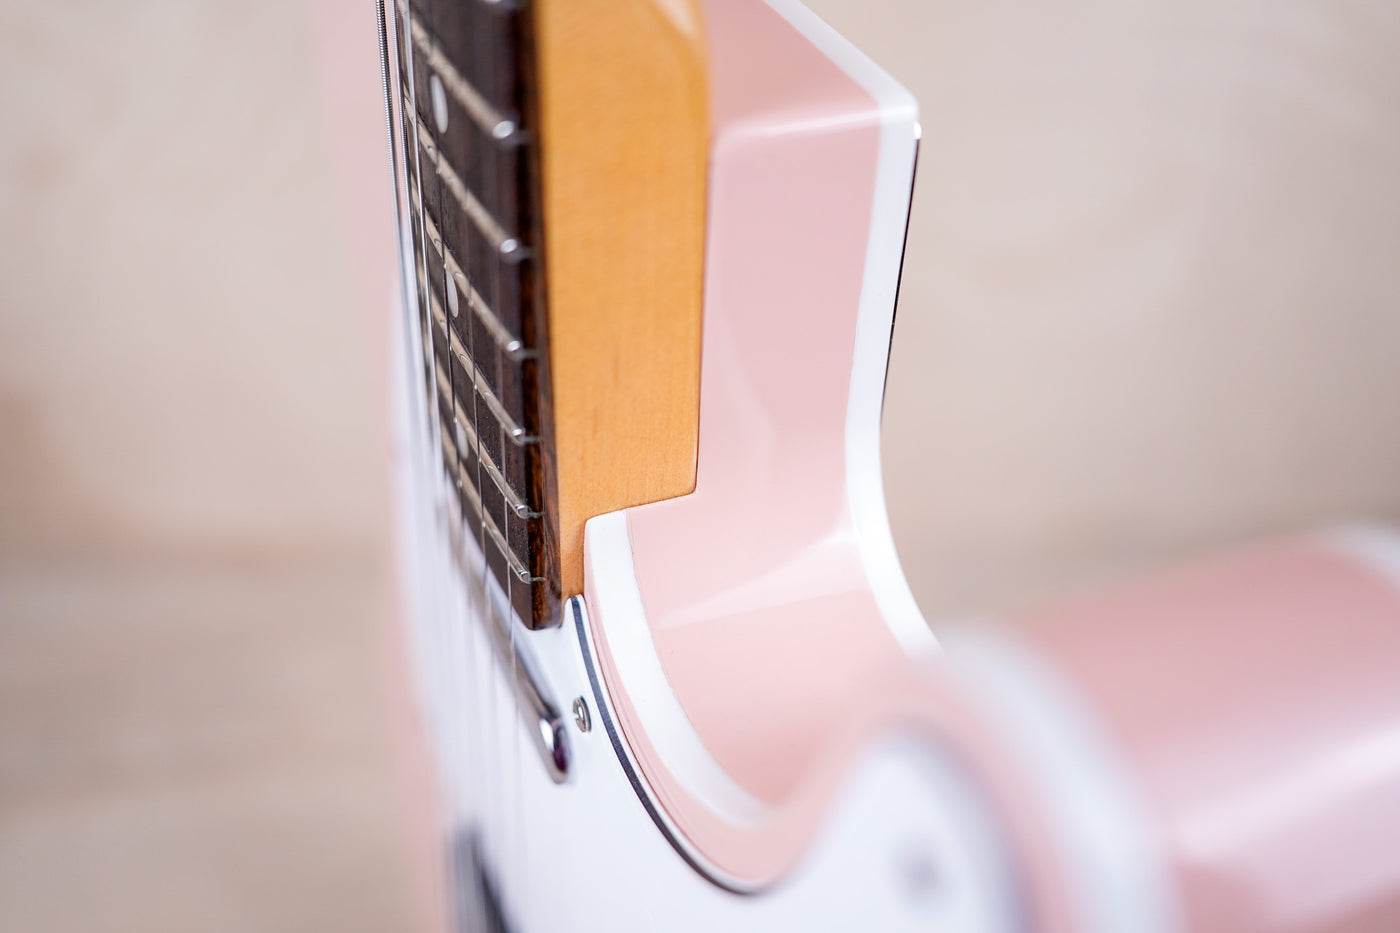 Fender American Original '60s Custom Telecaster 2019 Shell Pink Refinish w/ Hard Case